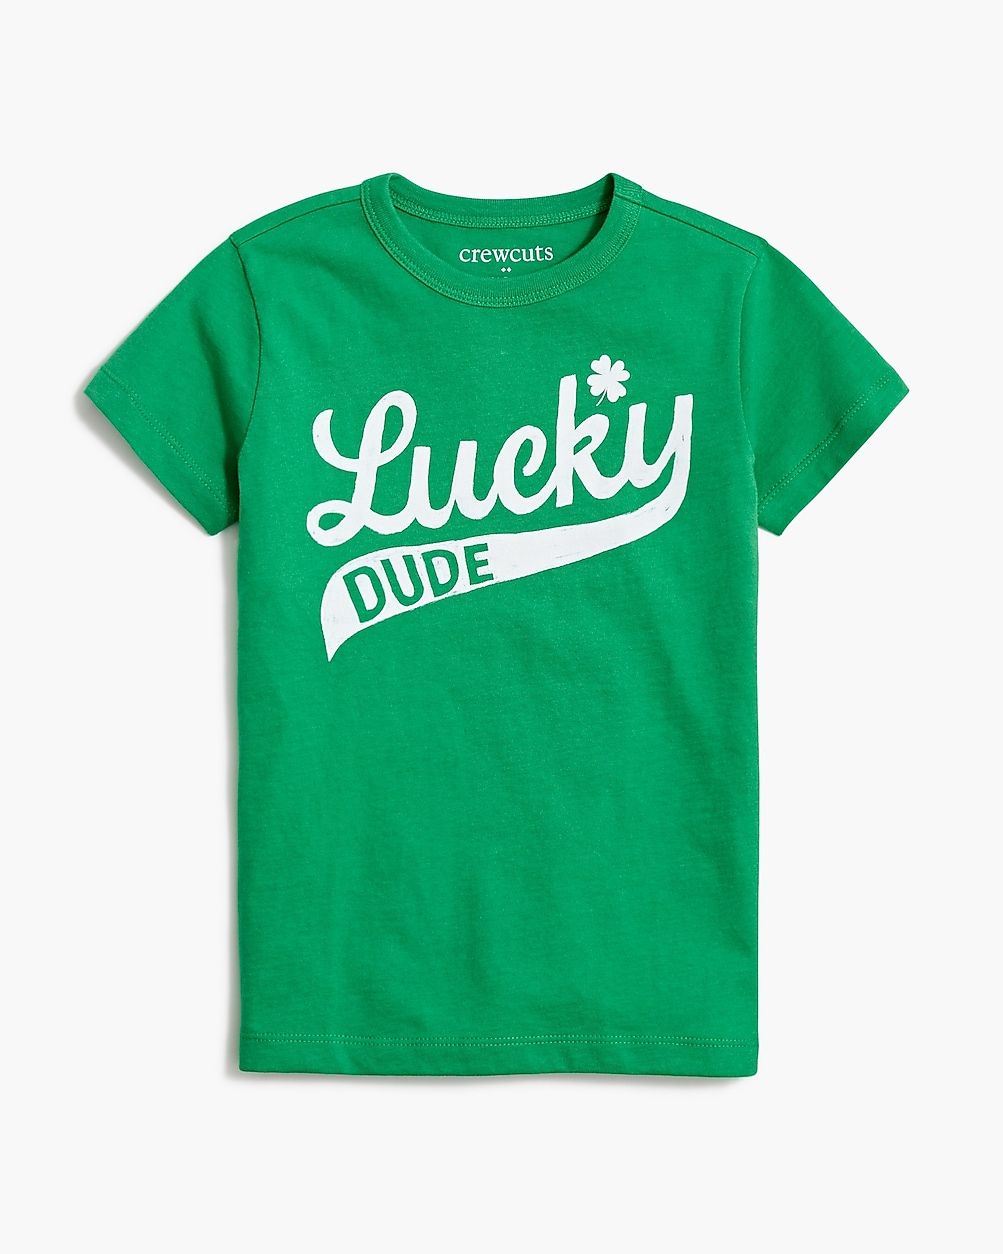 Boys' "Lucky Dude" graphic tee | J.Crew Factory